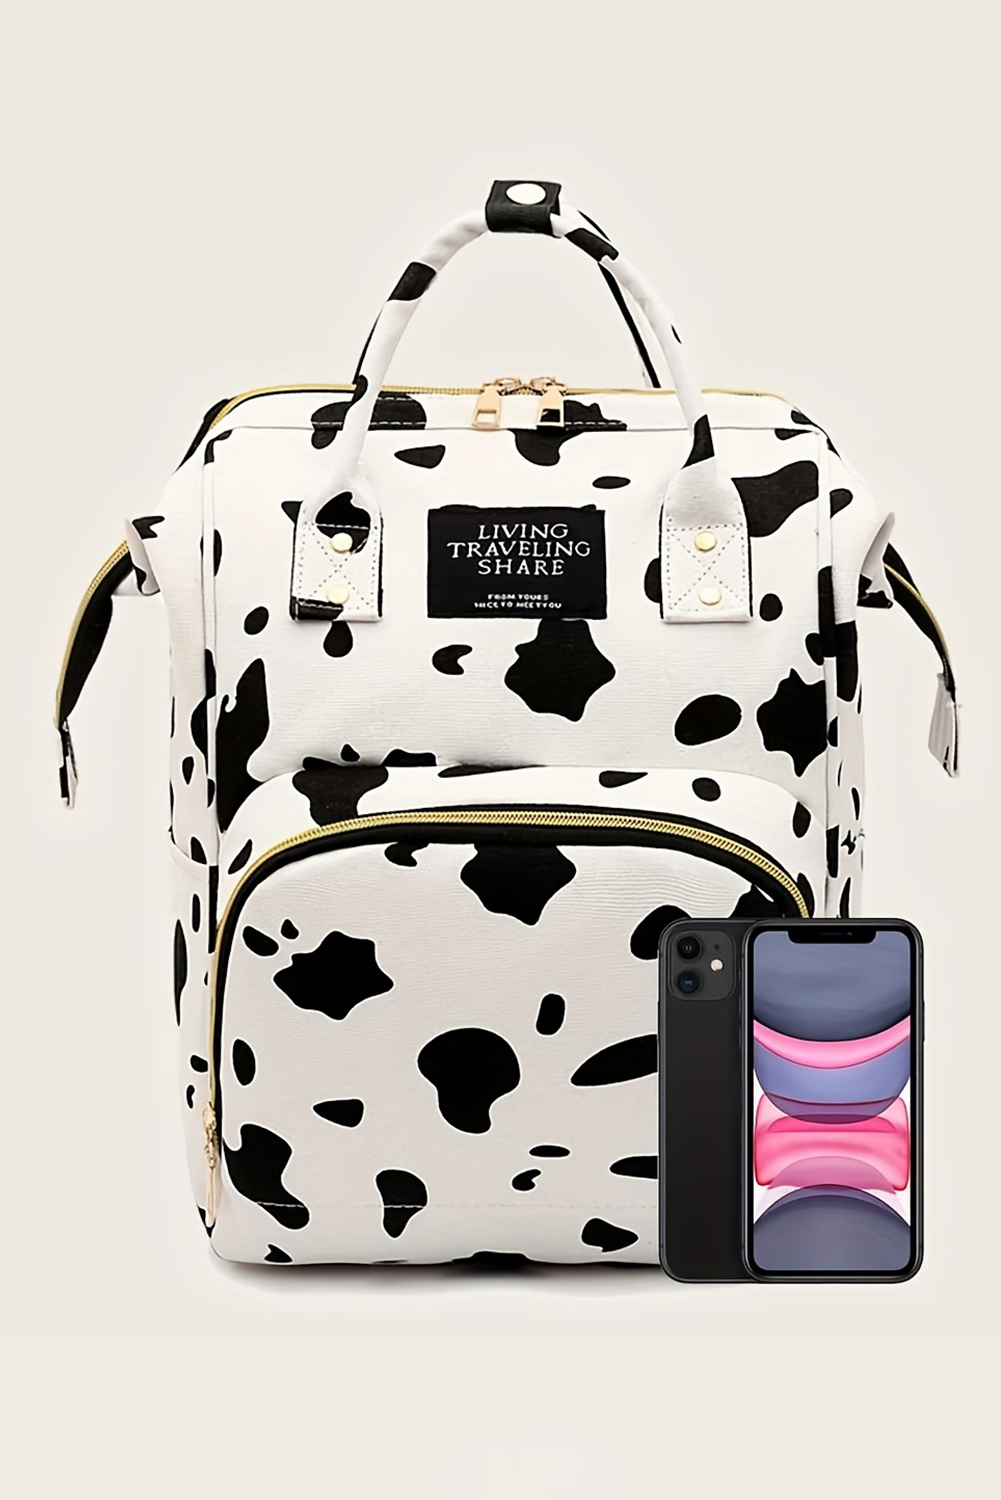 Azura Exchange Bright White Cow Spot Print Multi Pocket Canvas Backpack